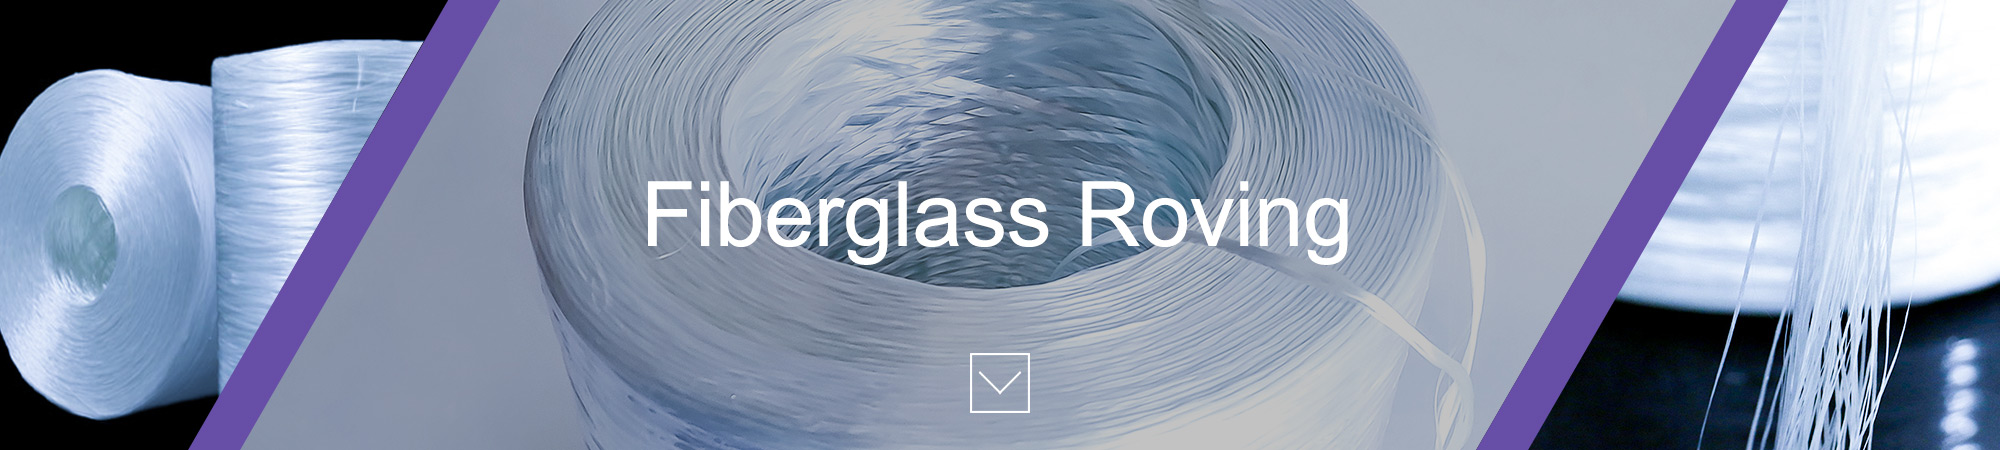 Fiberglass roving-HD Fiberglass